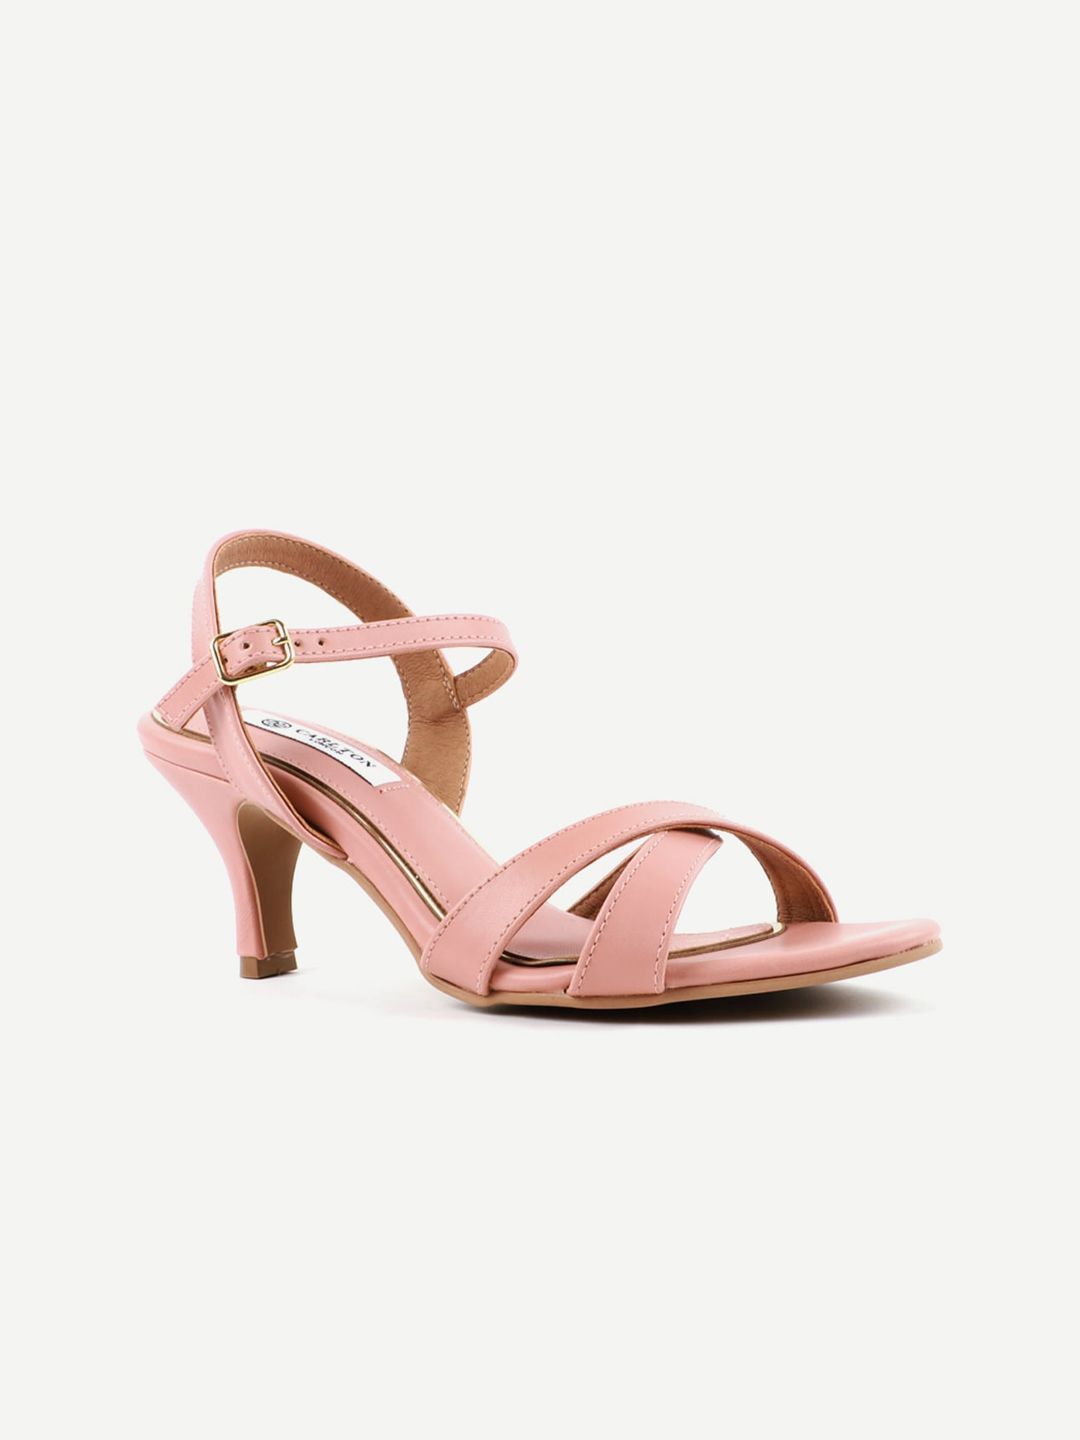 Carlton London Pink Sandals Price in India